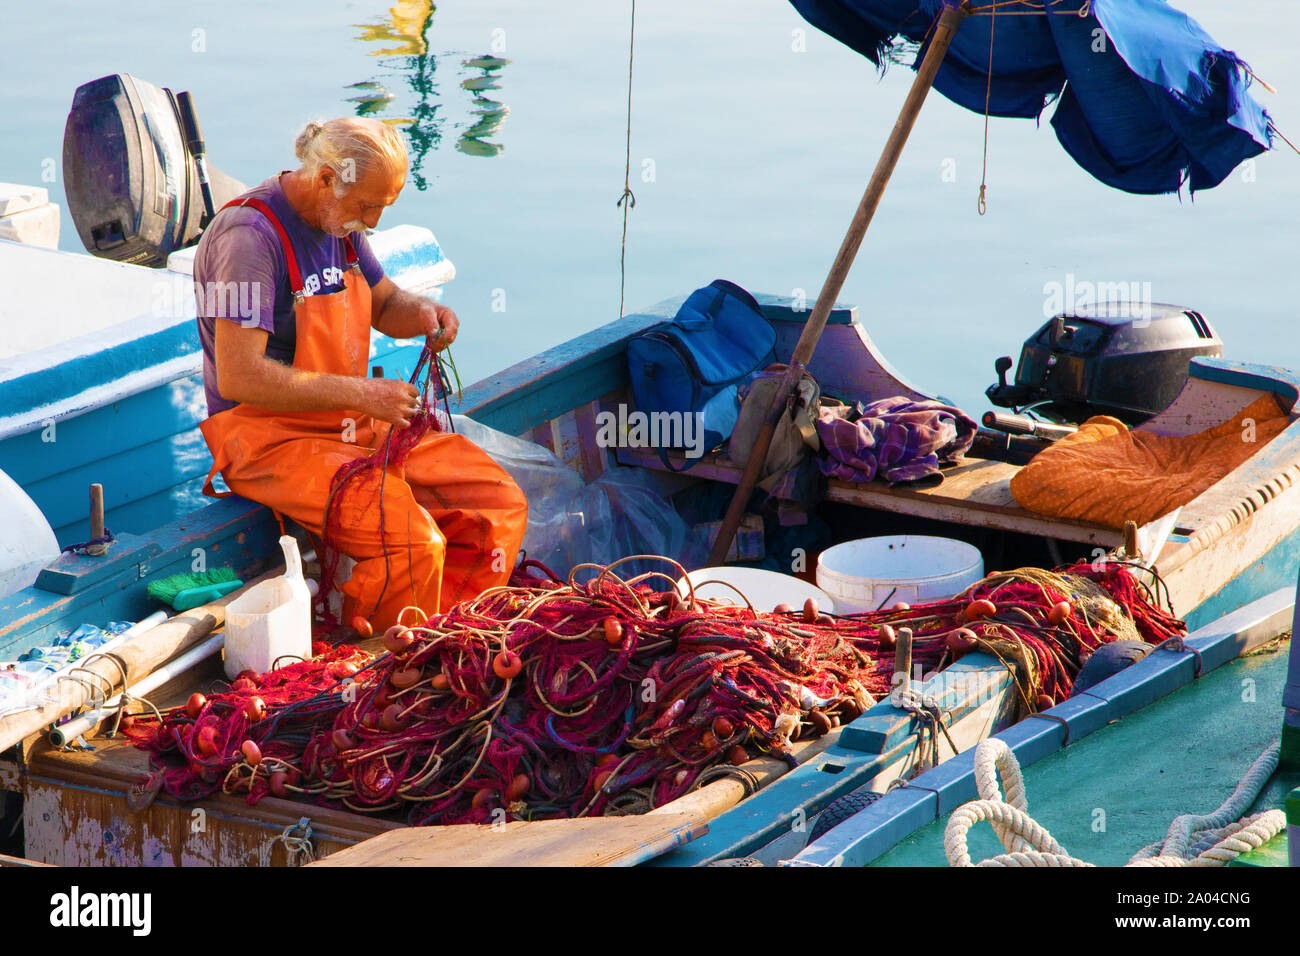 Reparando redes de pesca fotografías e imágenes de alta resolución - Alamy